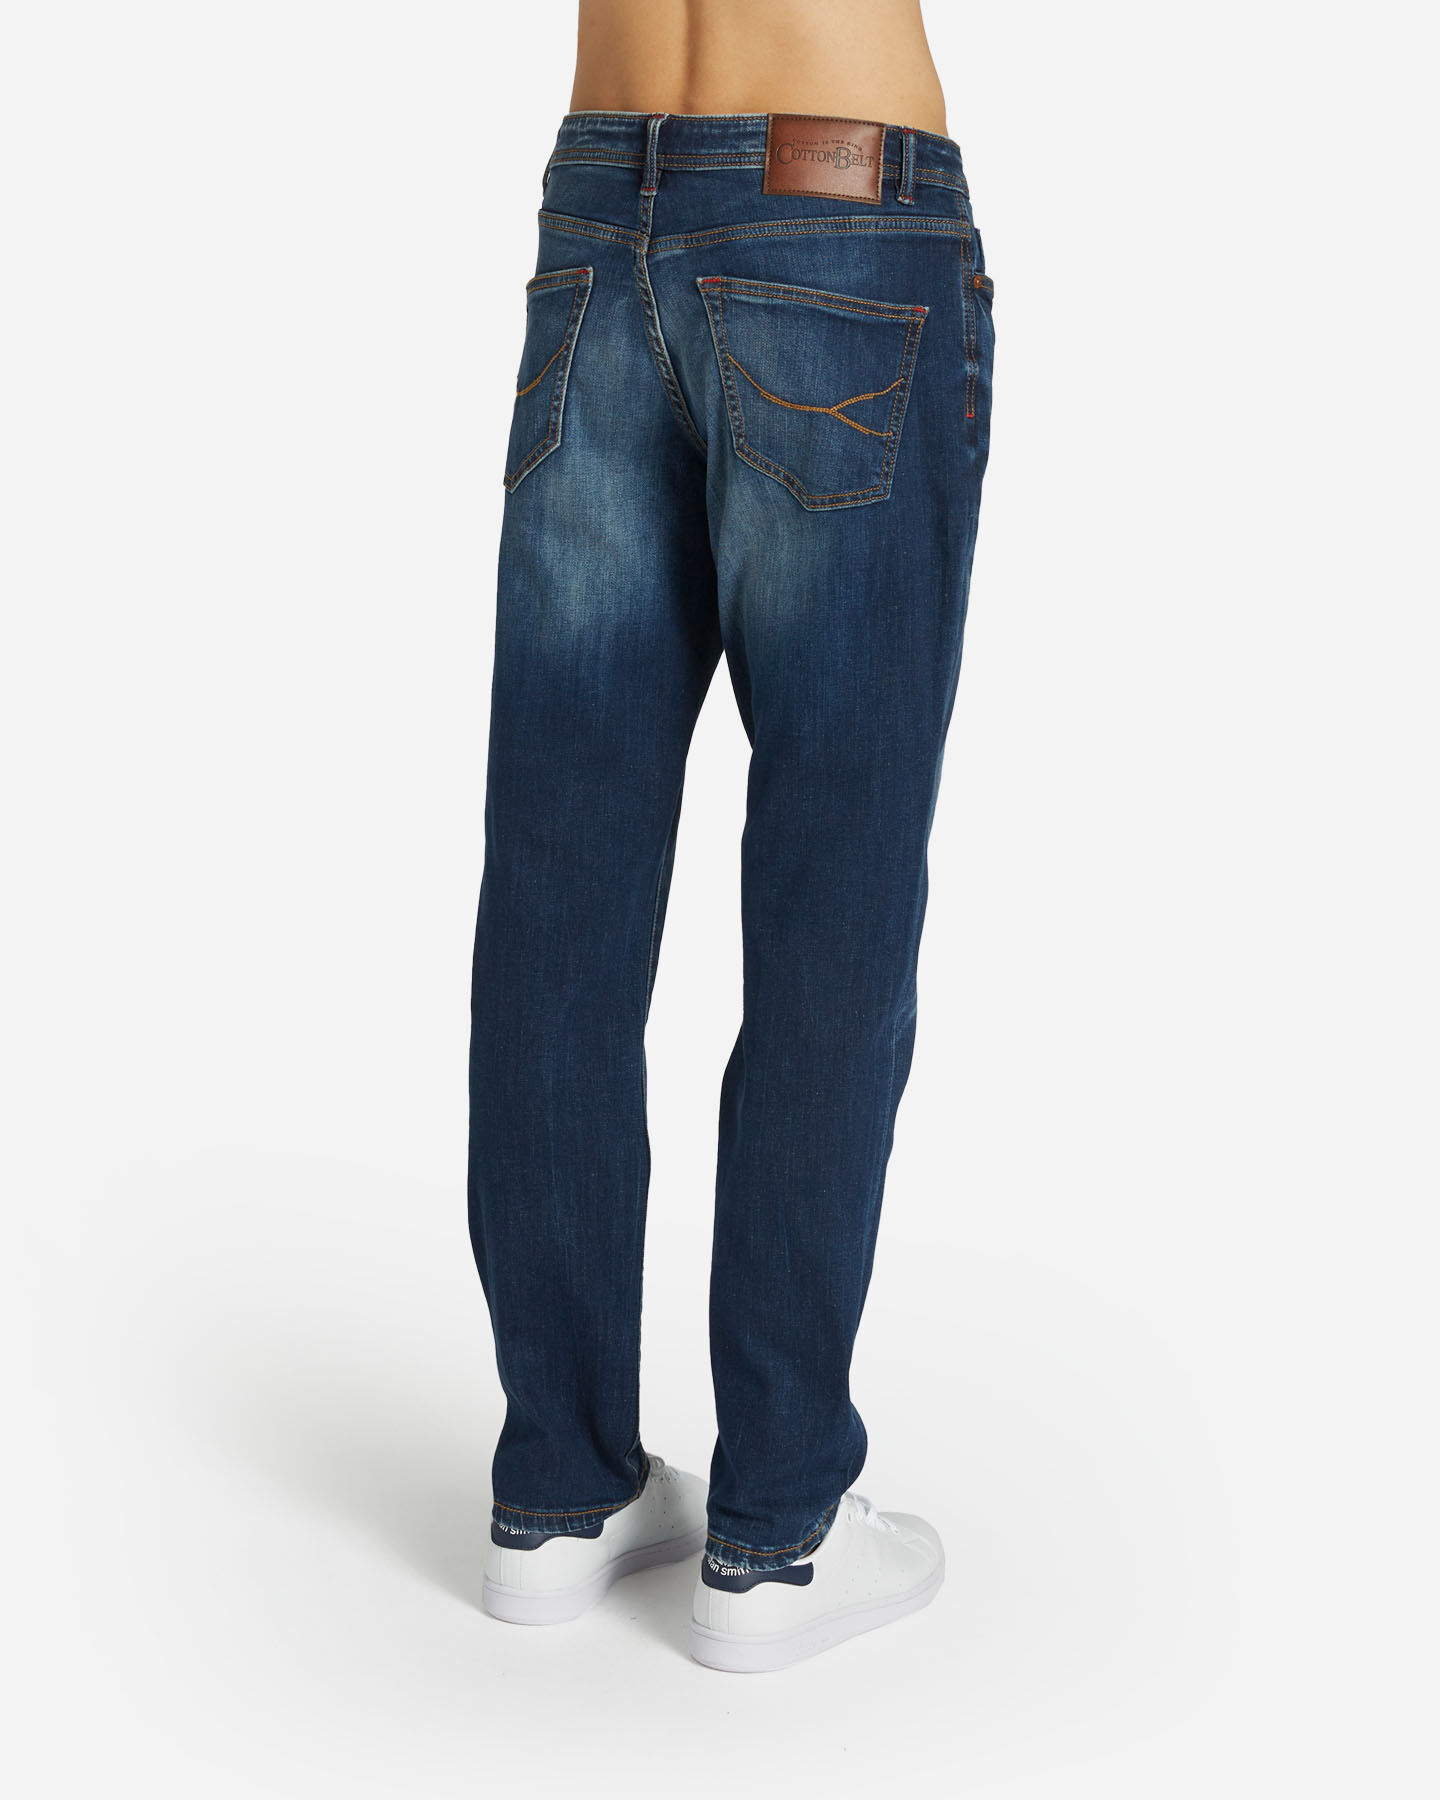  Jeans COTTON BELT 5 POCKET M S4126997|DD|40 scatto 1